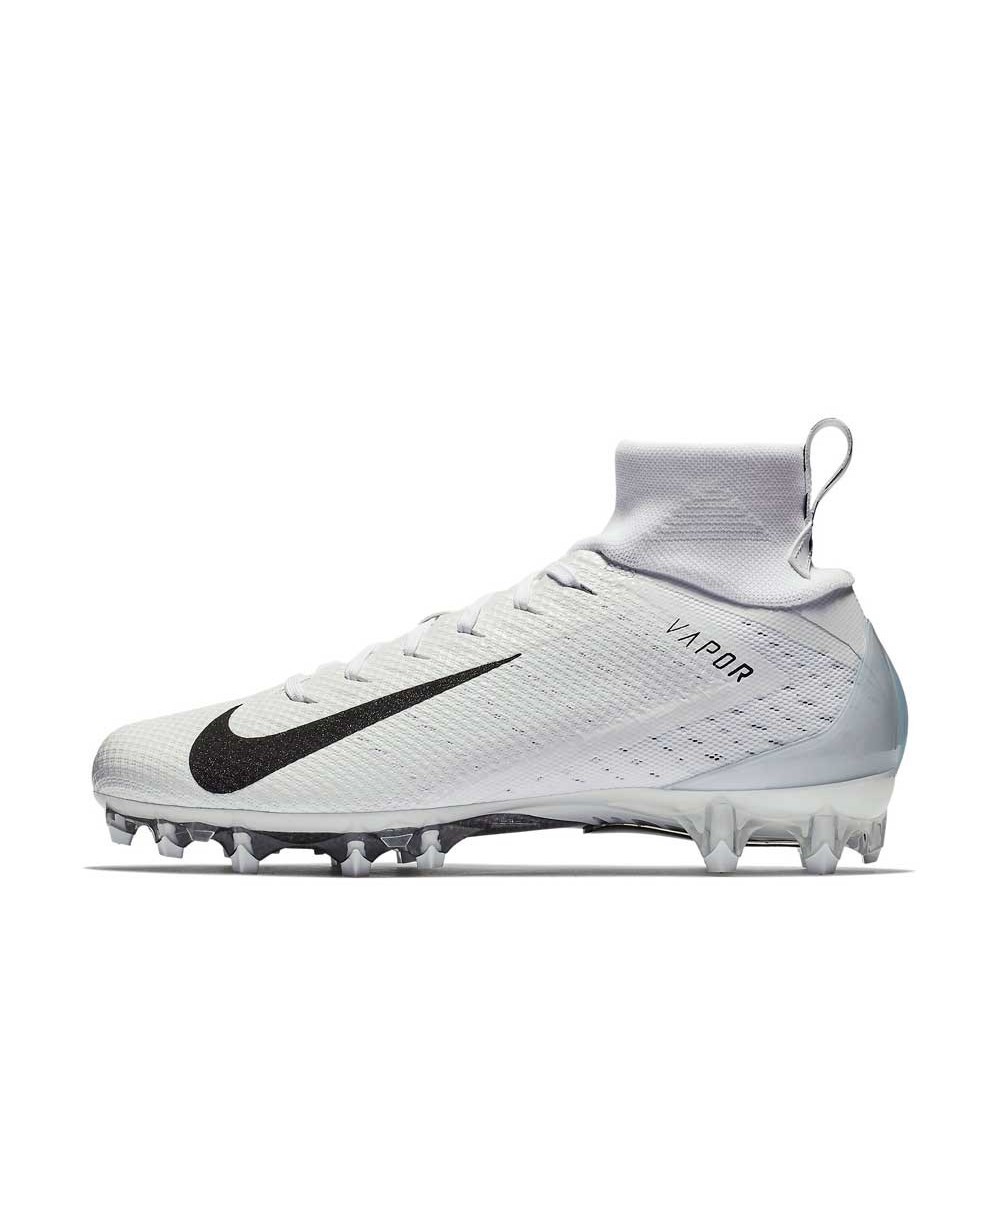 Nike Men's Vapor Untouchable 3 Pro American Football Cleats White